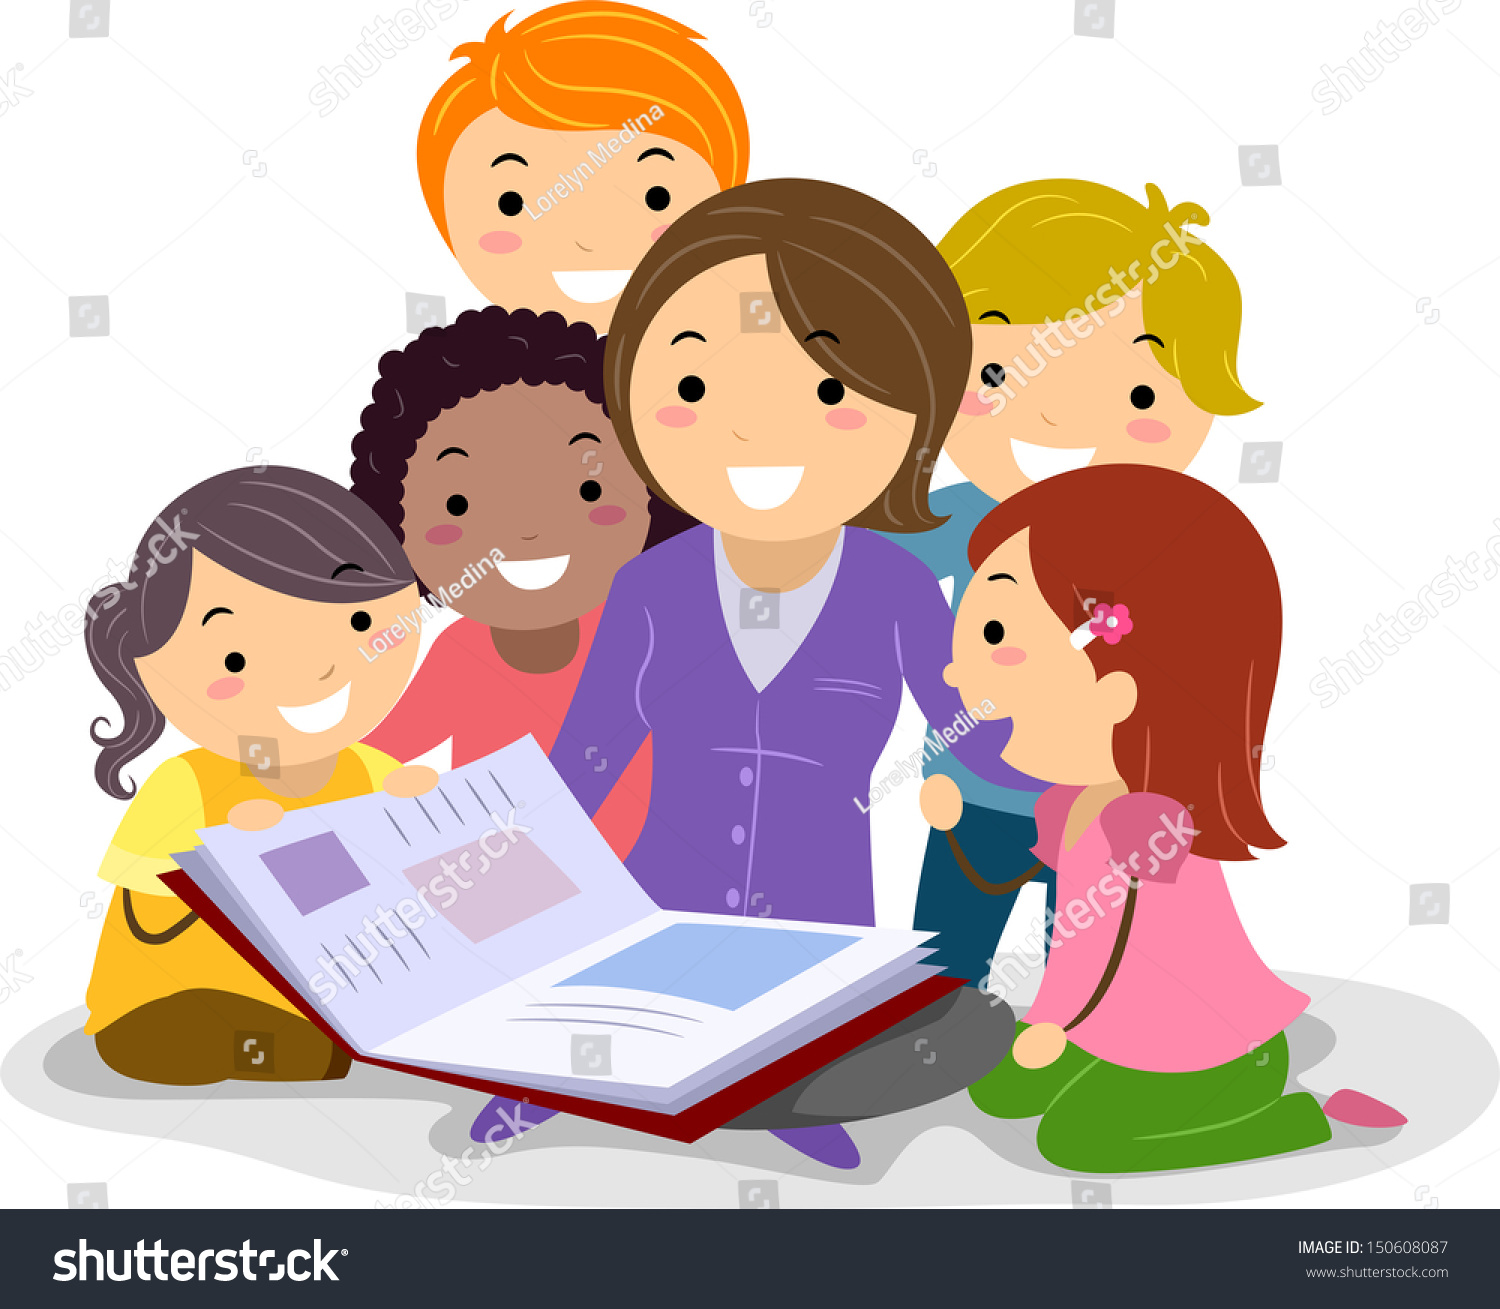 Stickman Illustration Featuring Kids Huddled Together Stock Photo ...